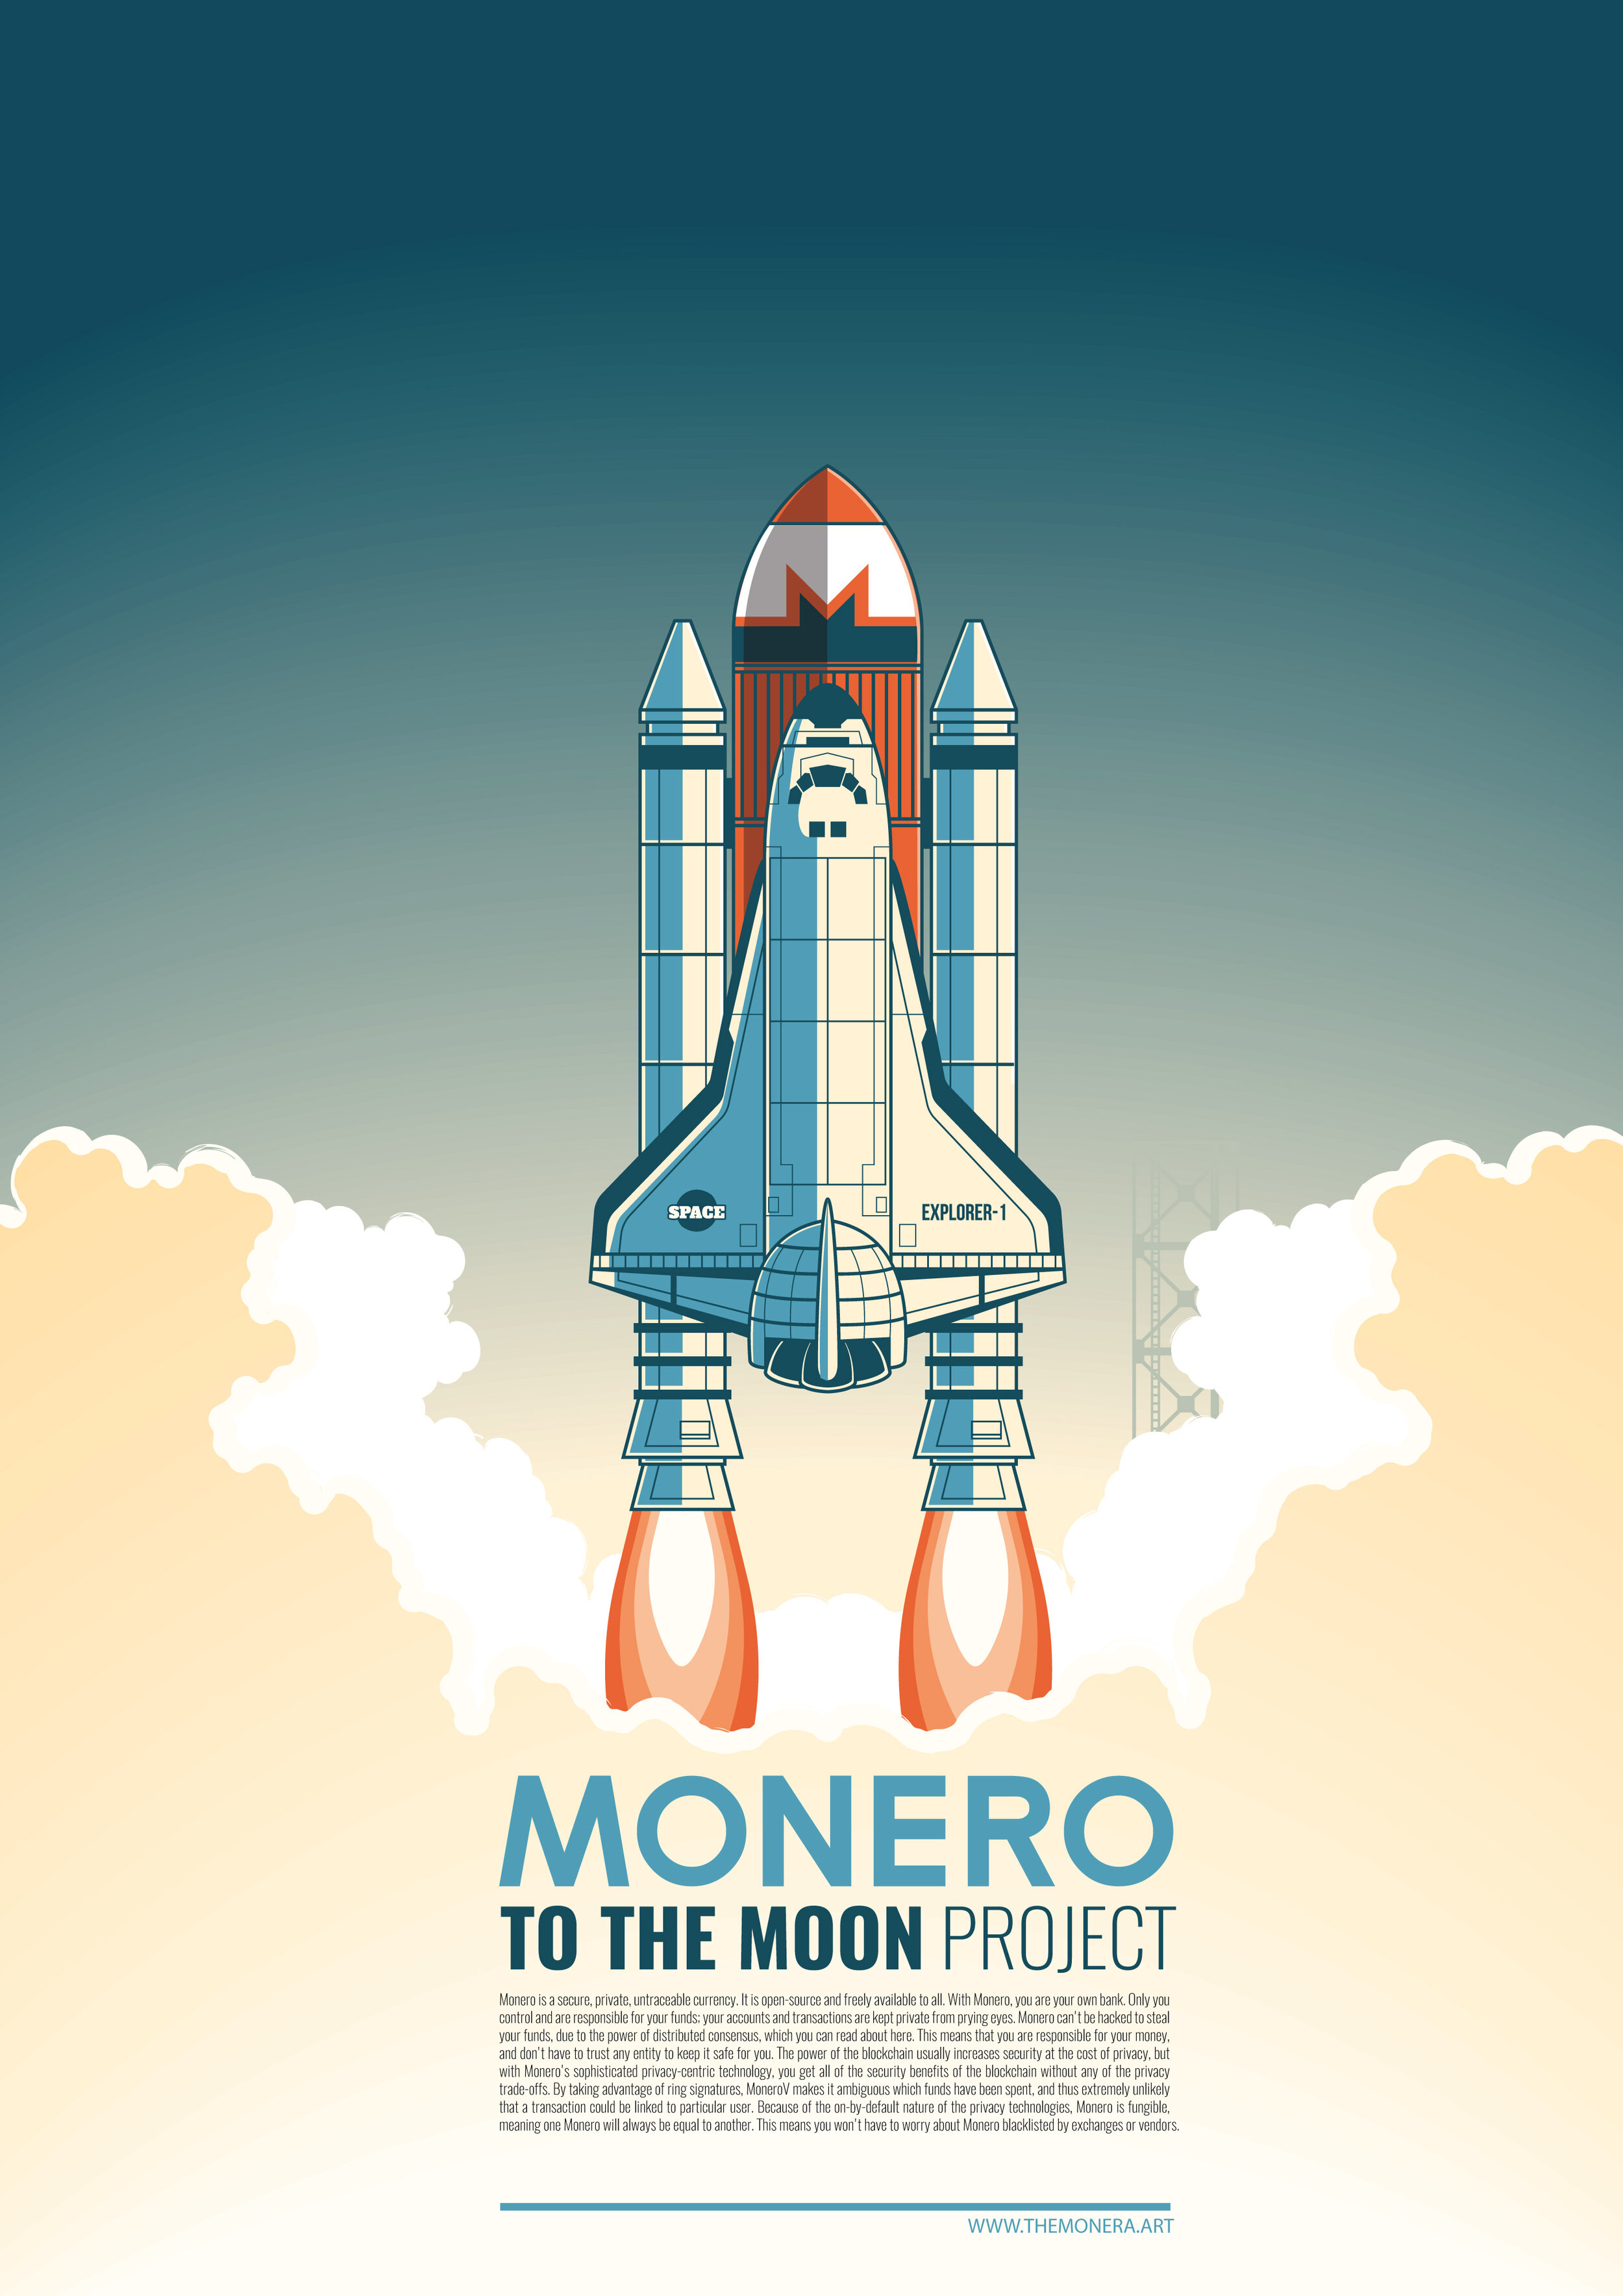 To-the-moon-project-Monero_themonera_art.jpg